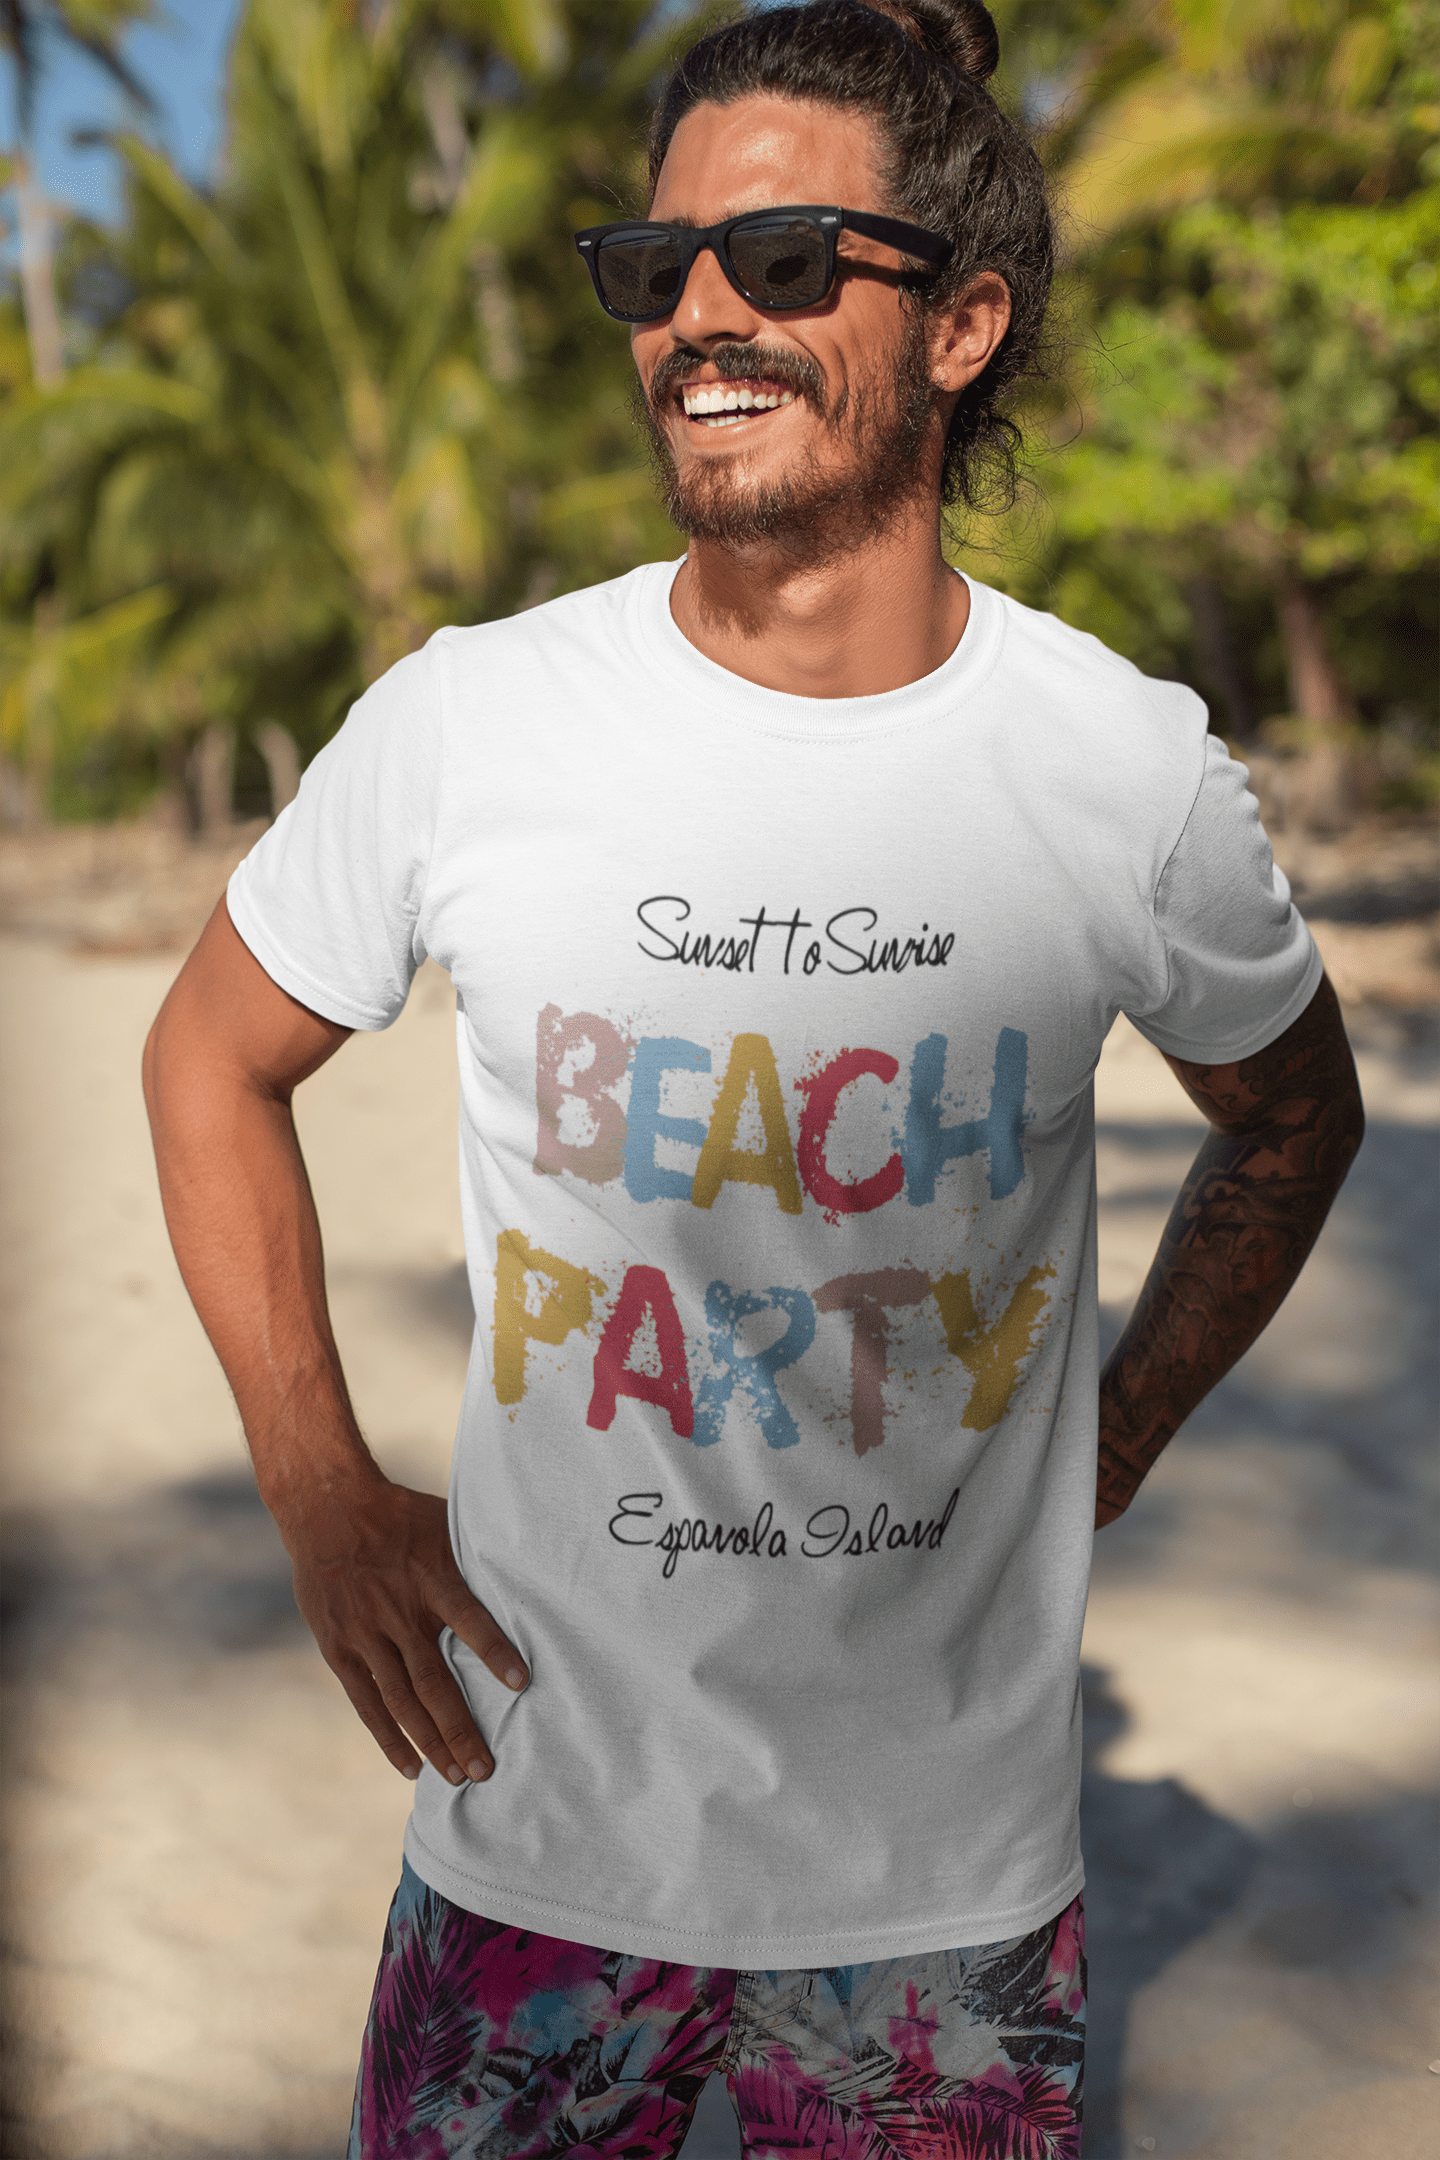 Espanola Island, Beach Party, White, Men's Short Sleeve Round Neck T-shirt 00279